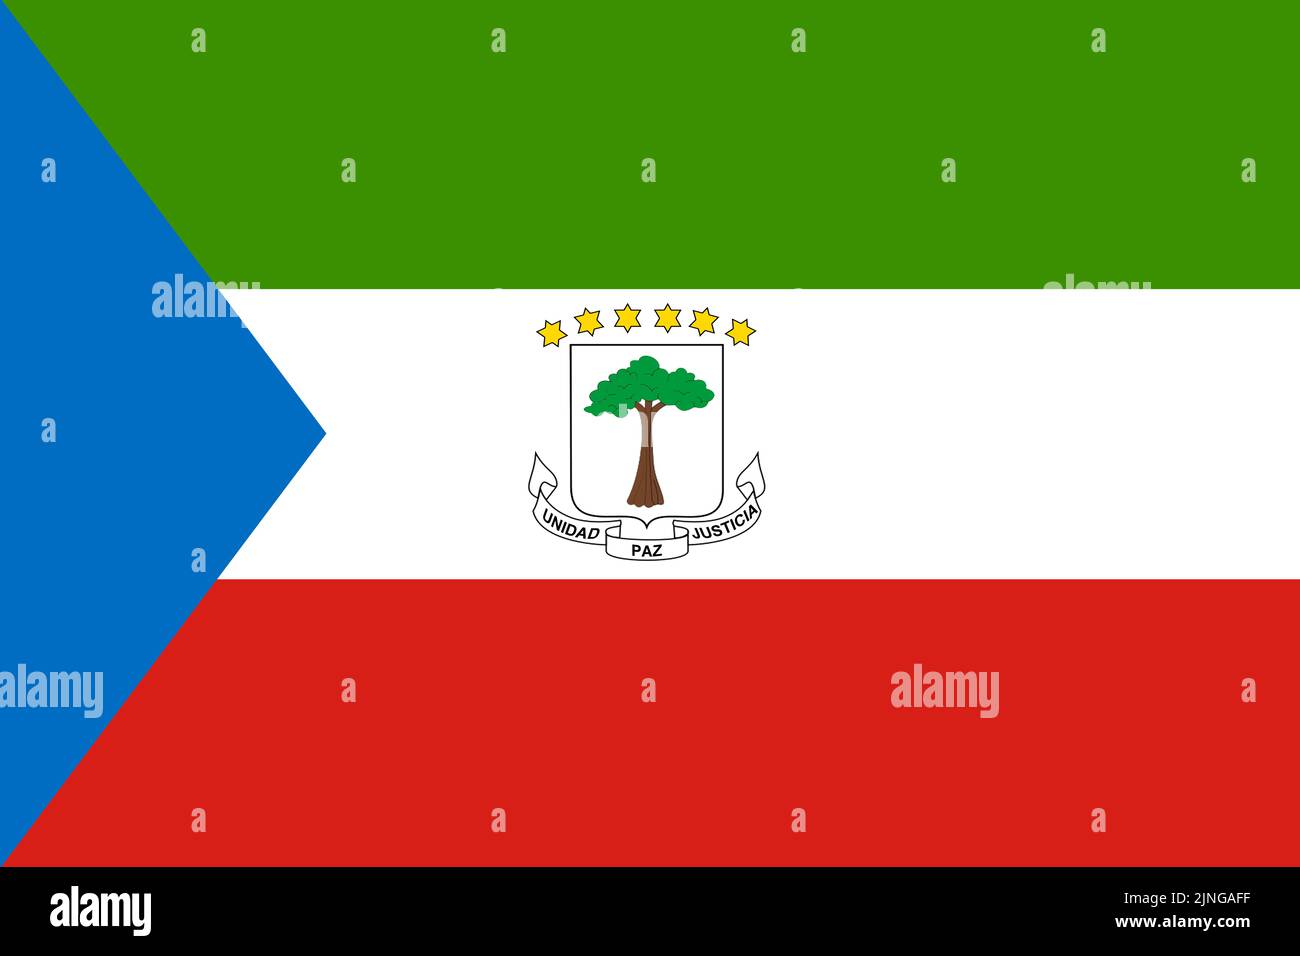 Equatorial Guinea flag illustration blue green white red yellow stars tree Stock Photo